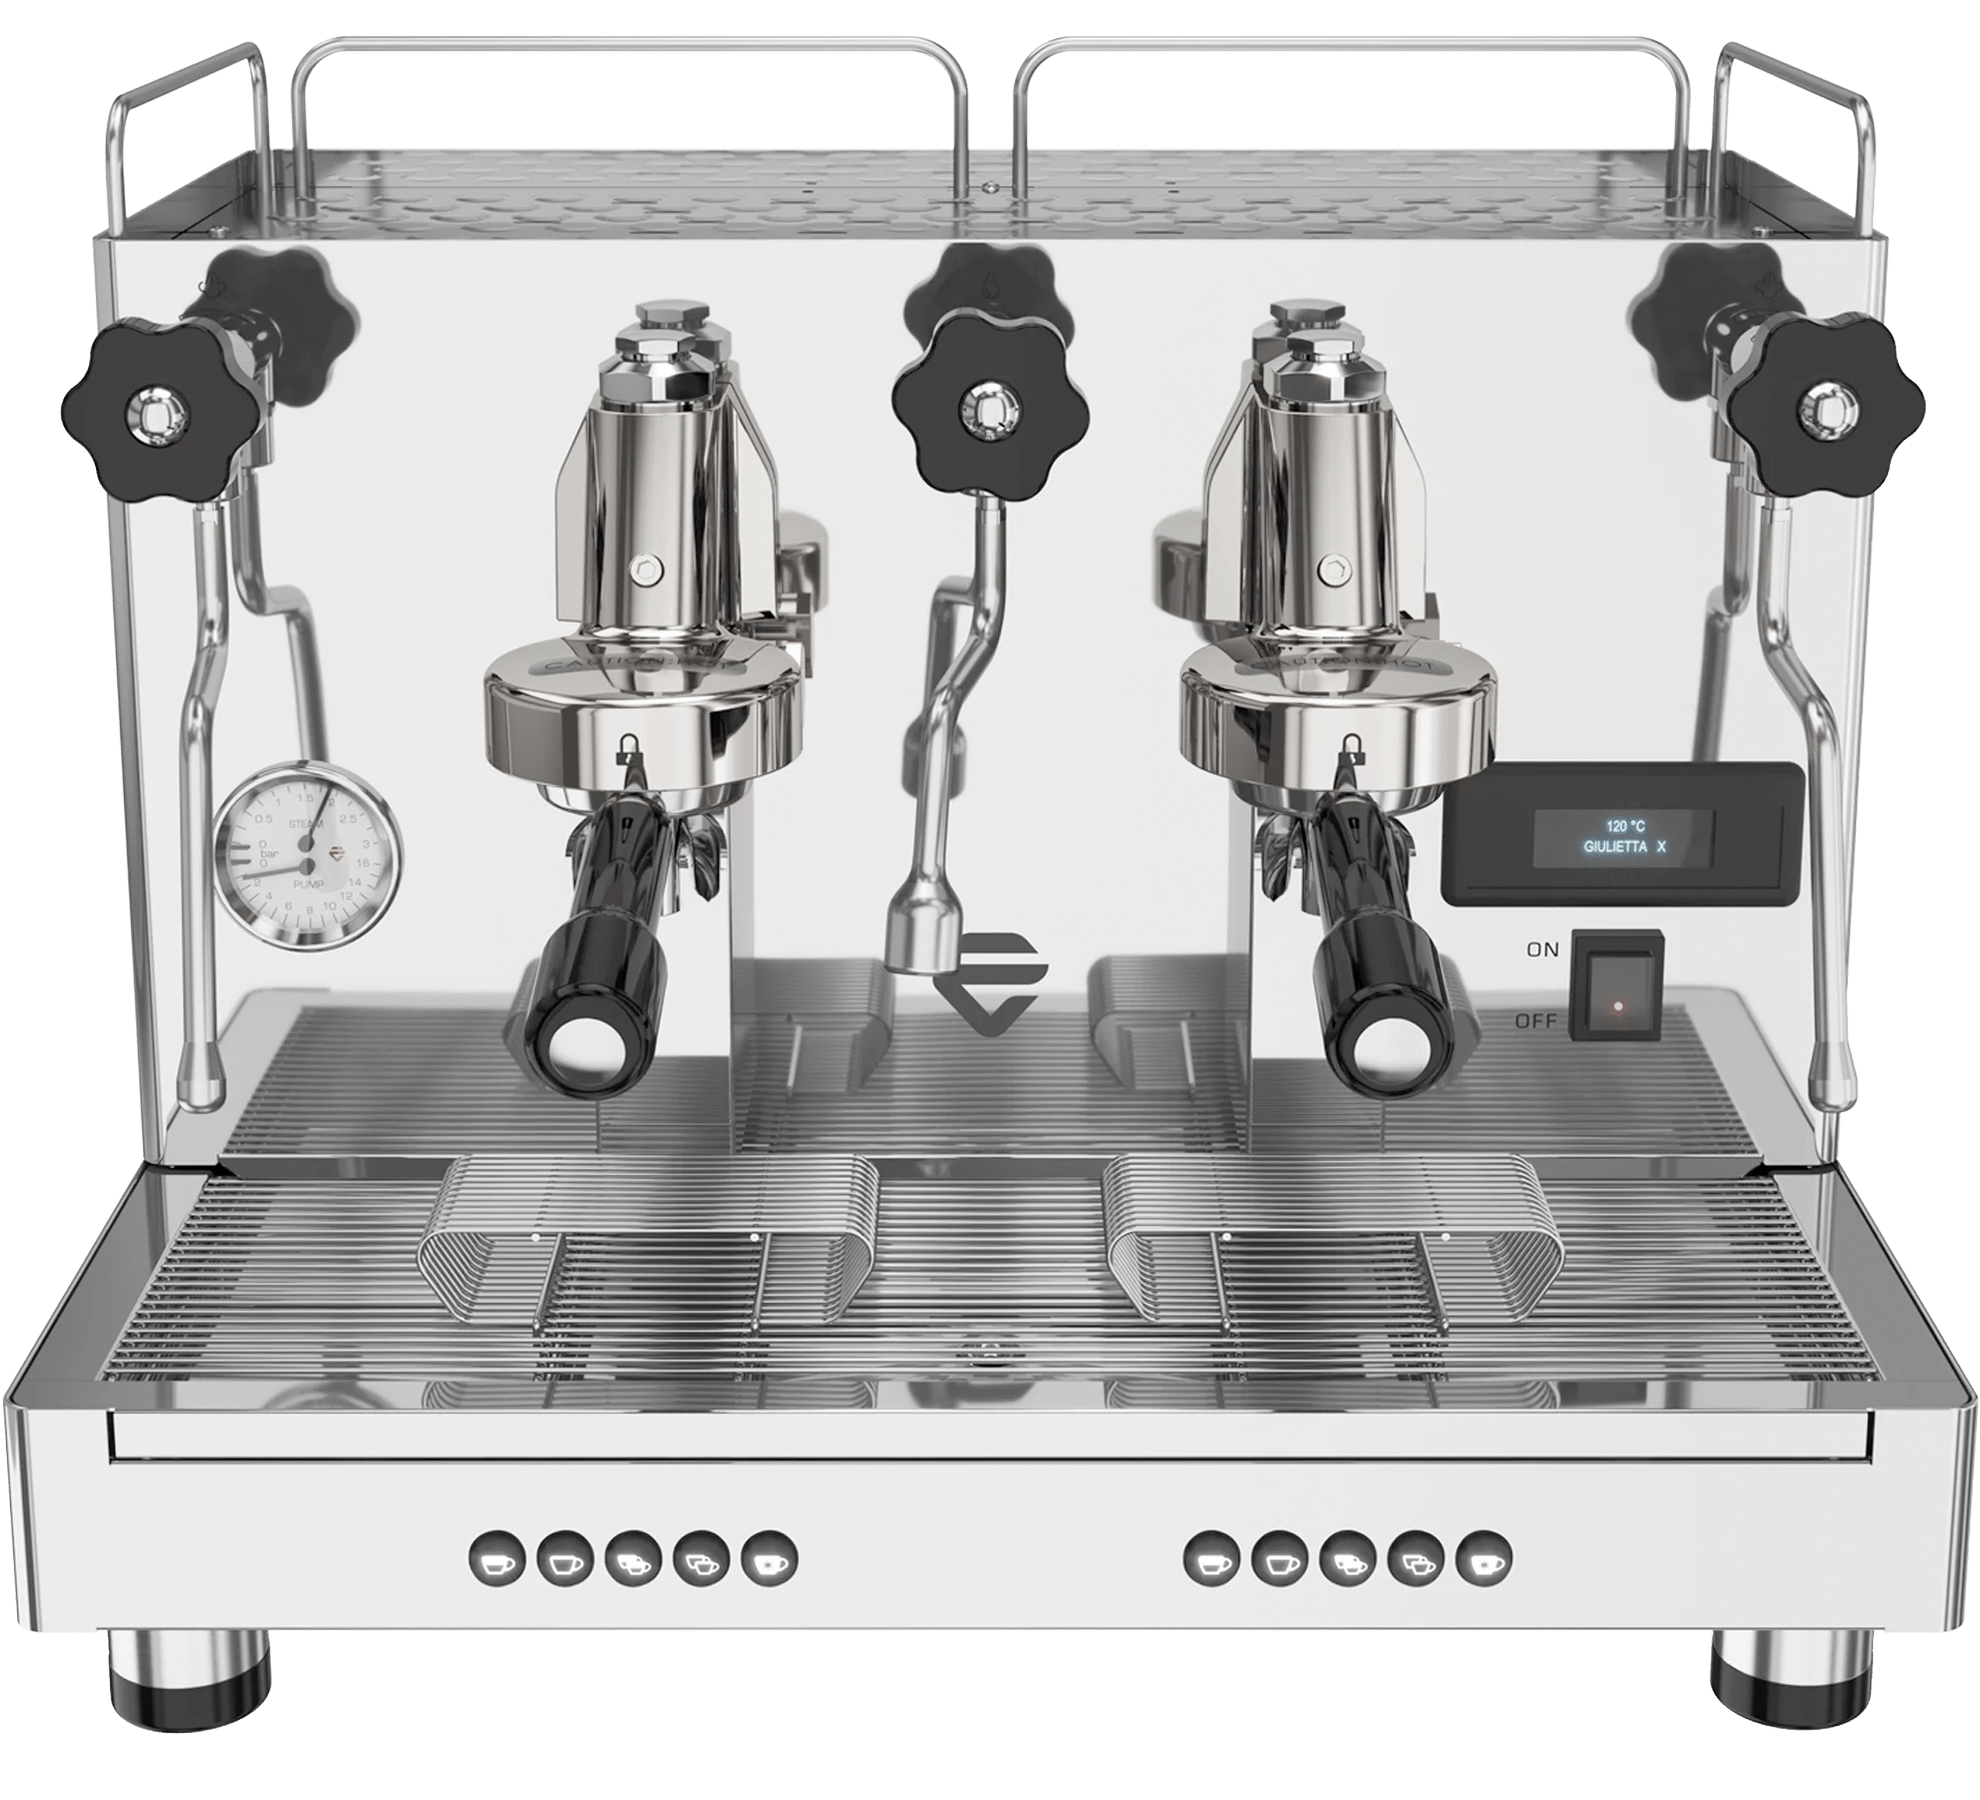 Lelit Giulietta X PL2SVX Two group professional espresso machine